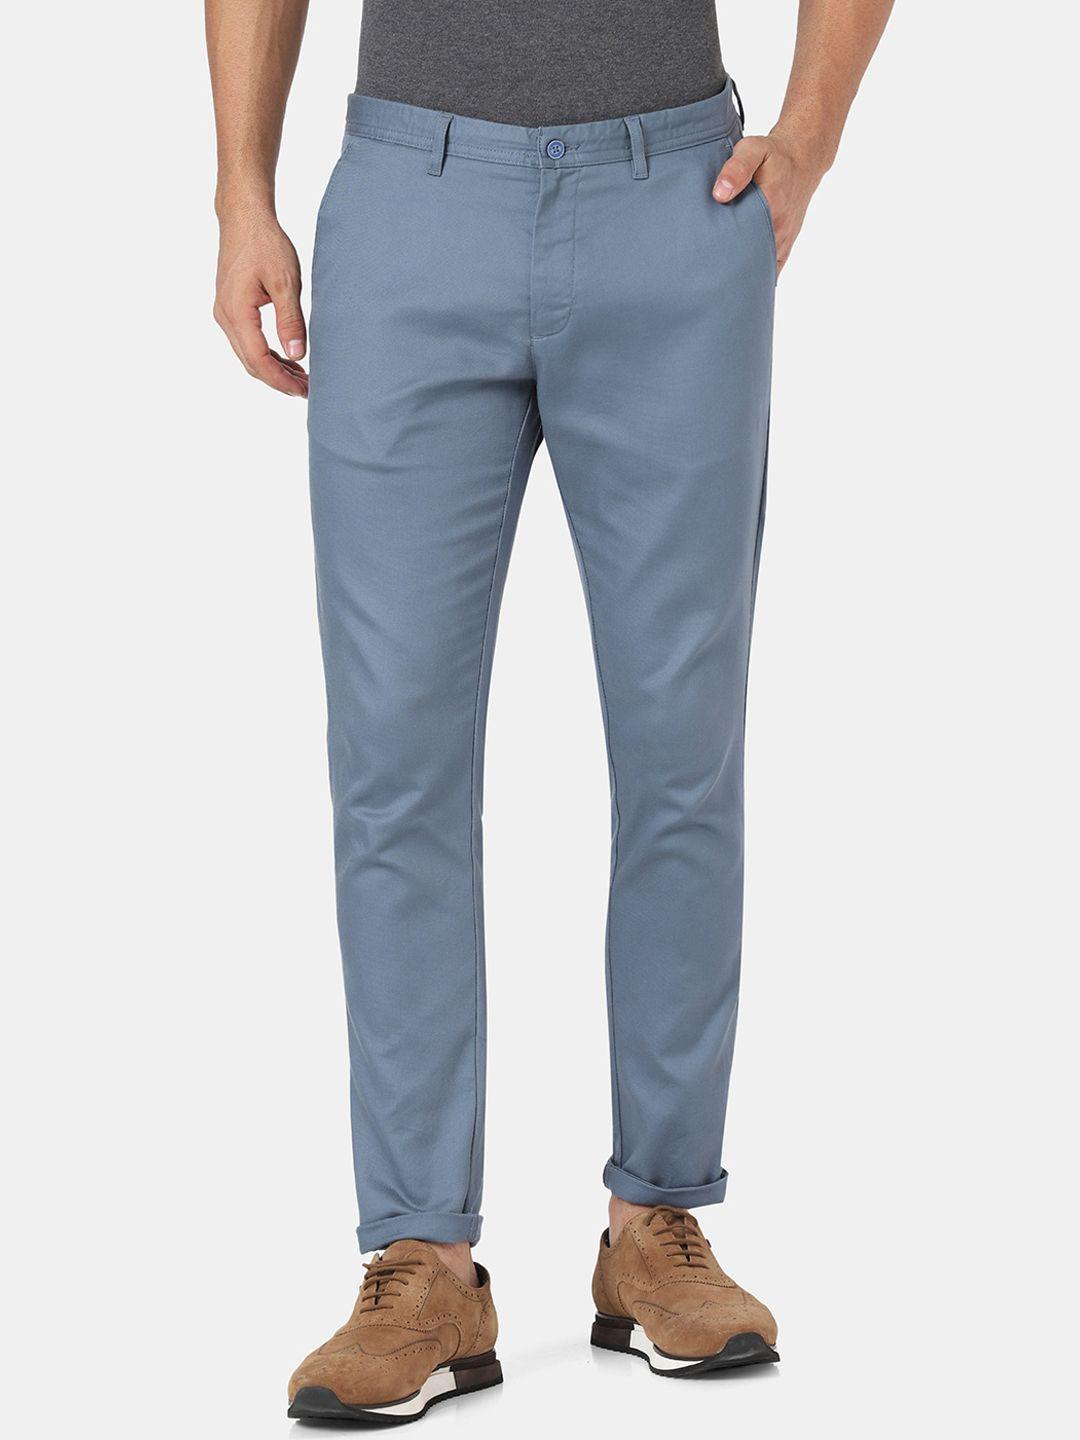 blackberrys-men-blue-skinny-fit-low-rise-chinos-trousers